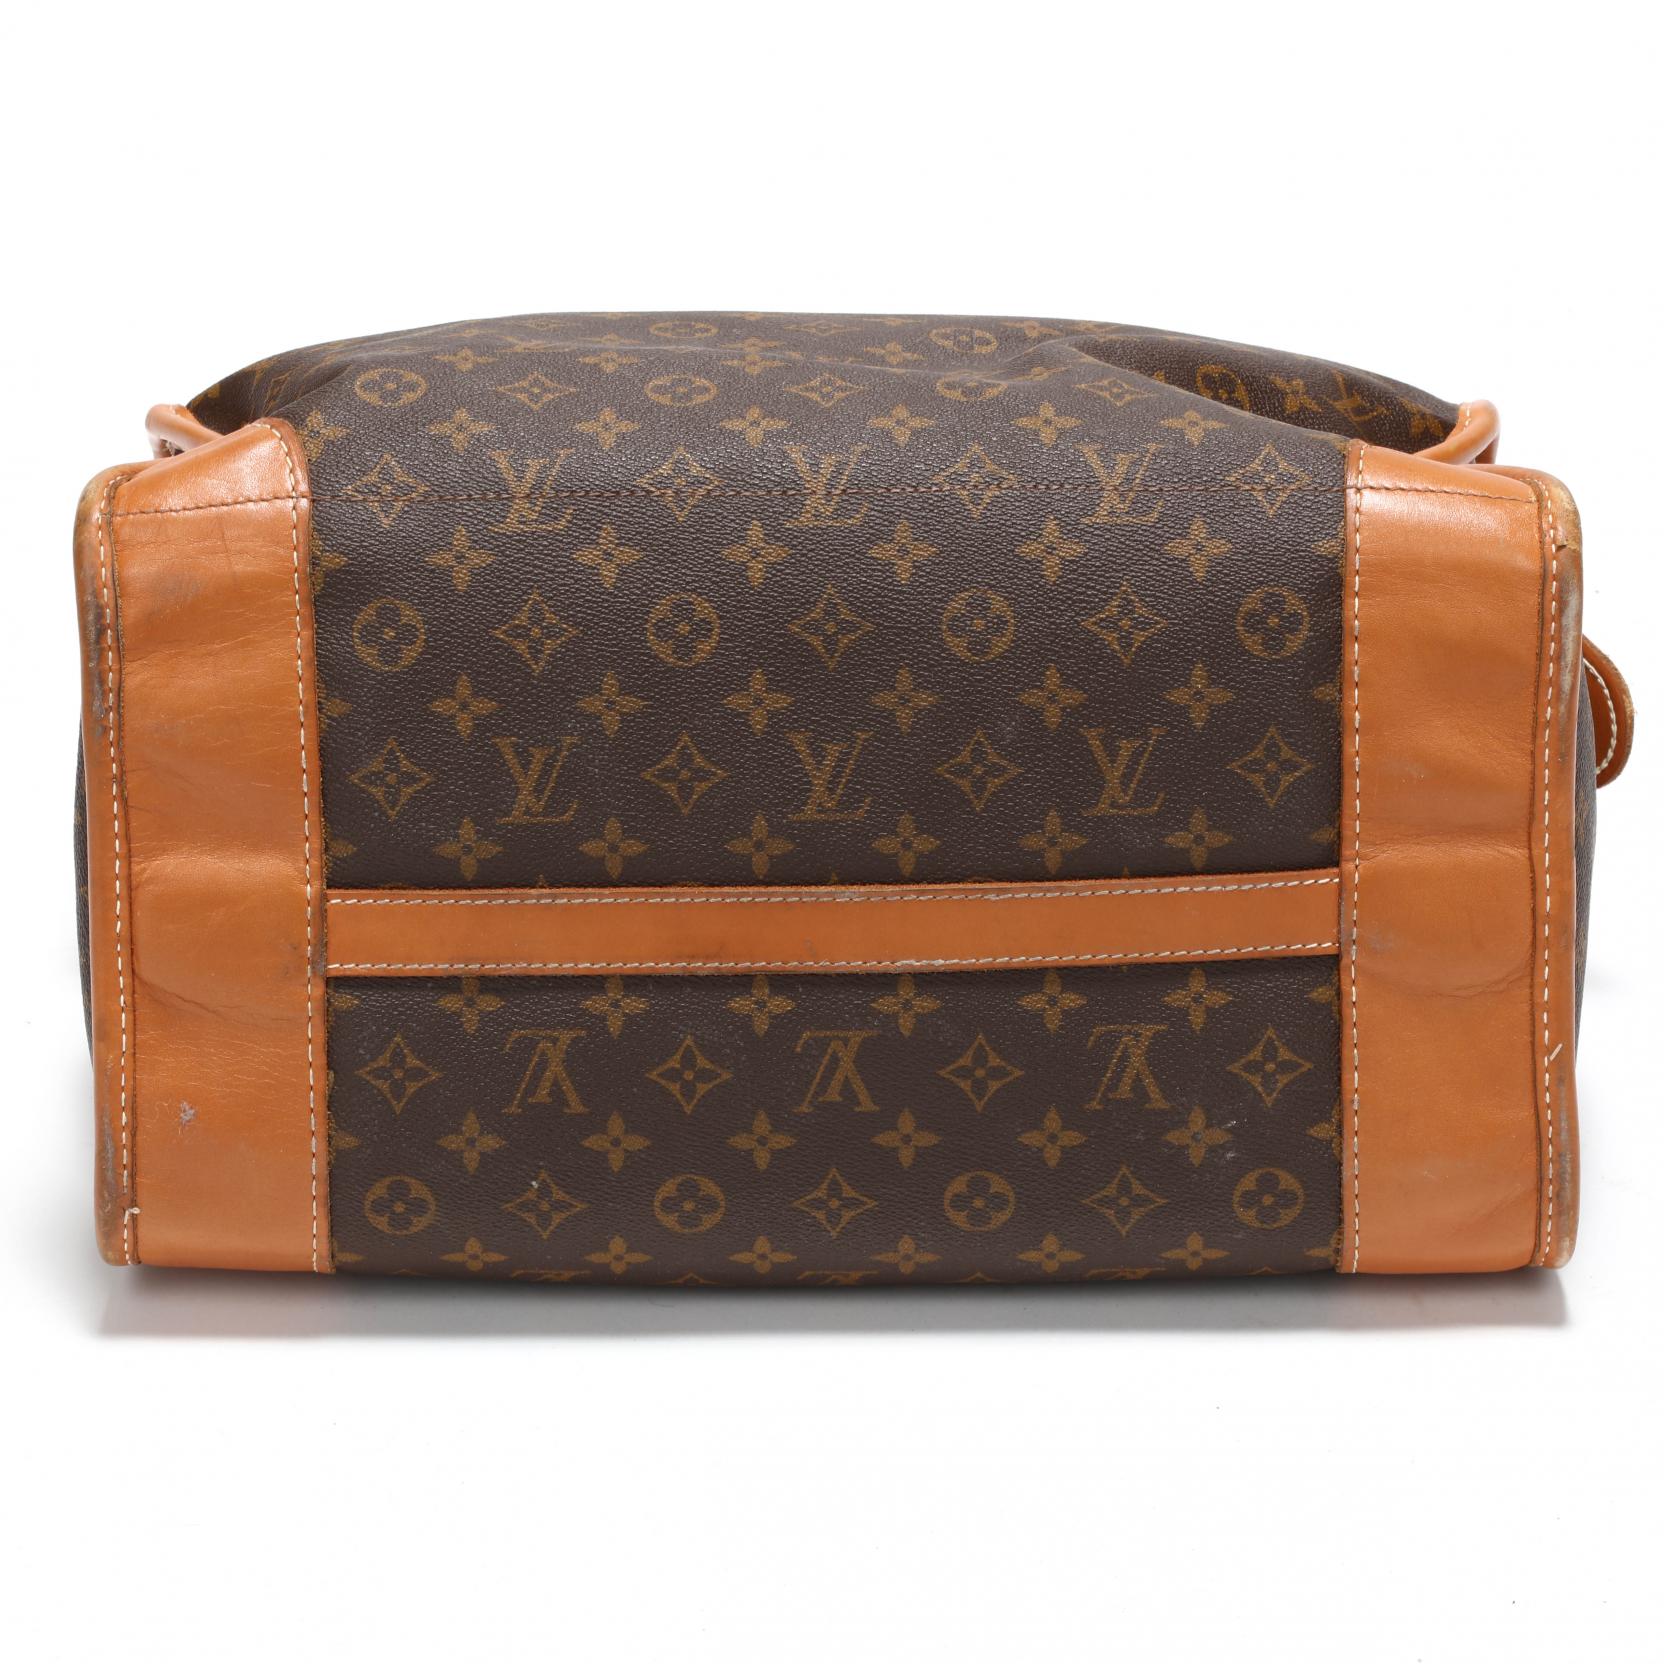 Louis Vuitton Beaubourg Travel bag 391989